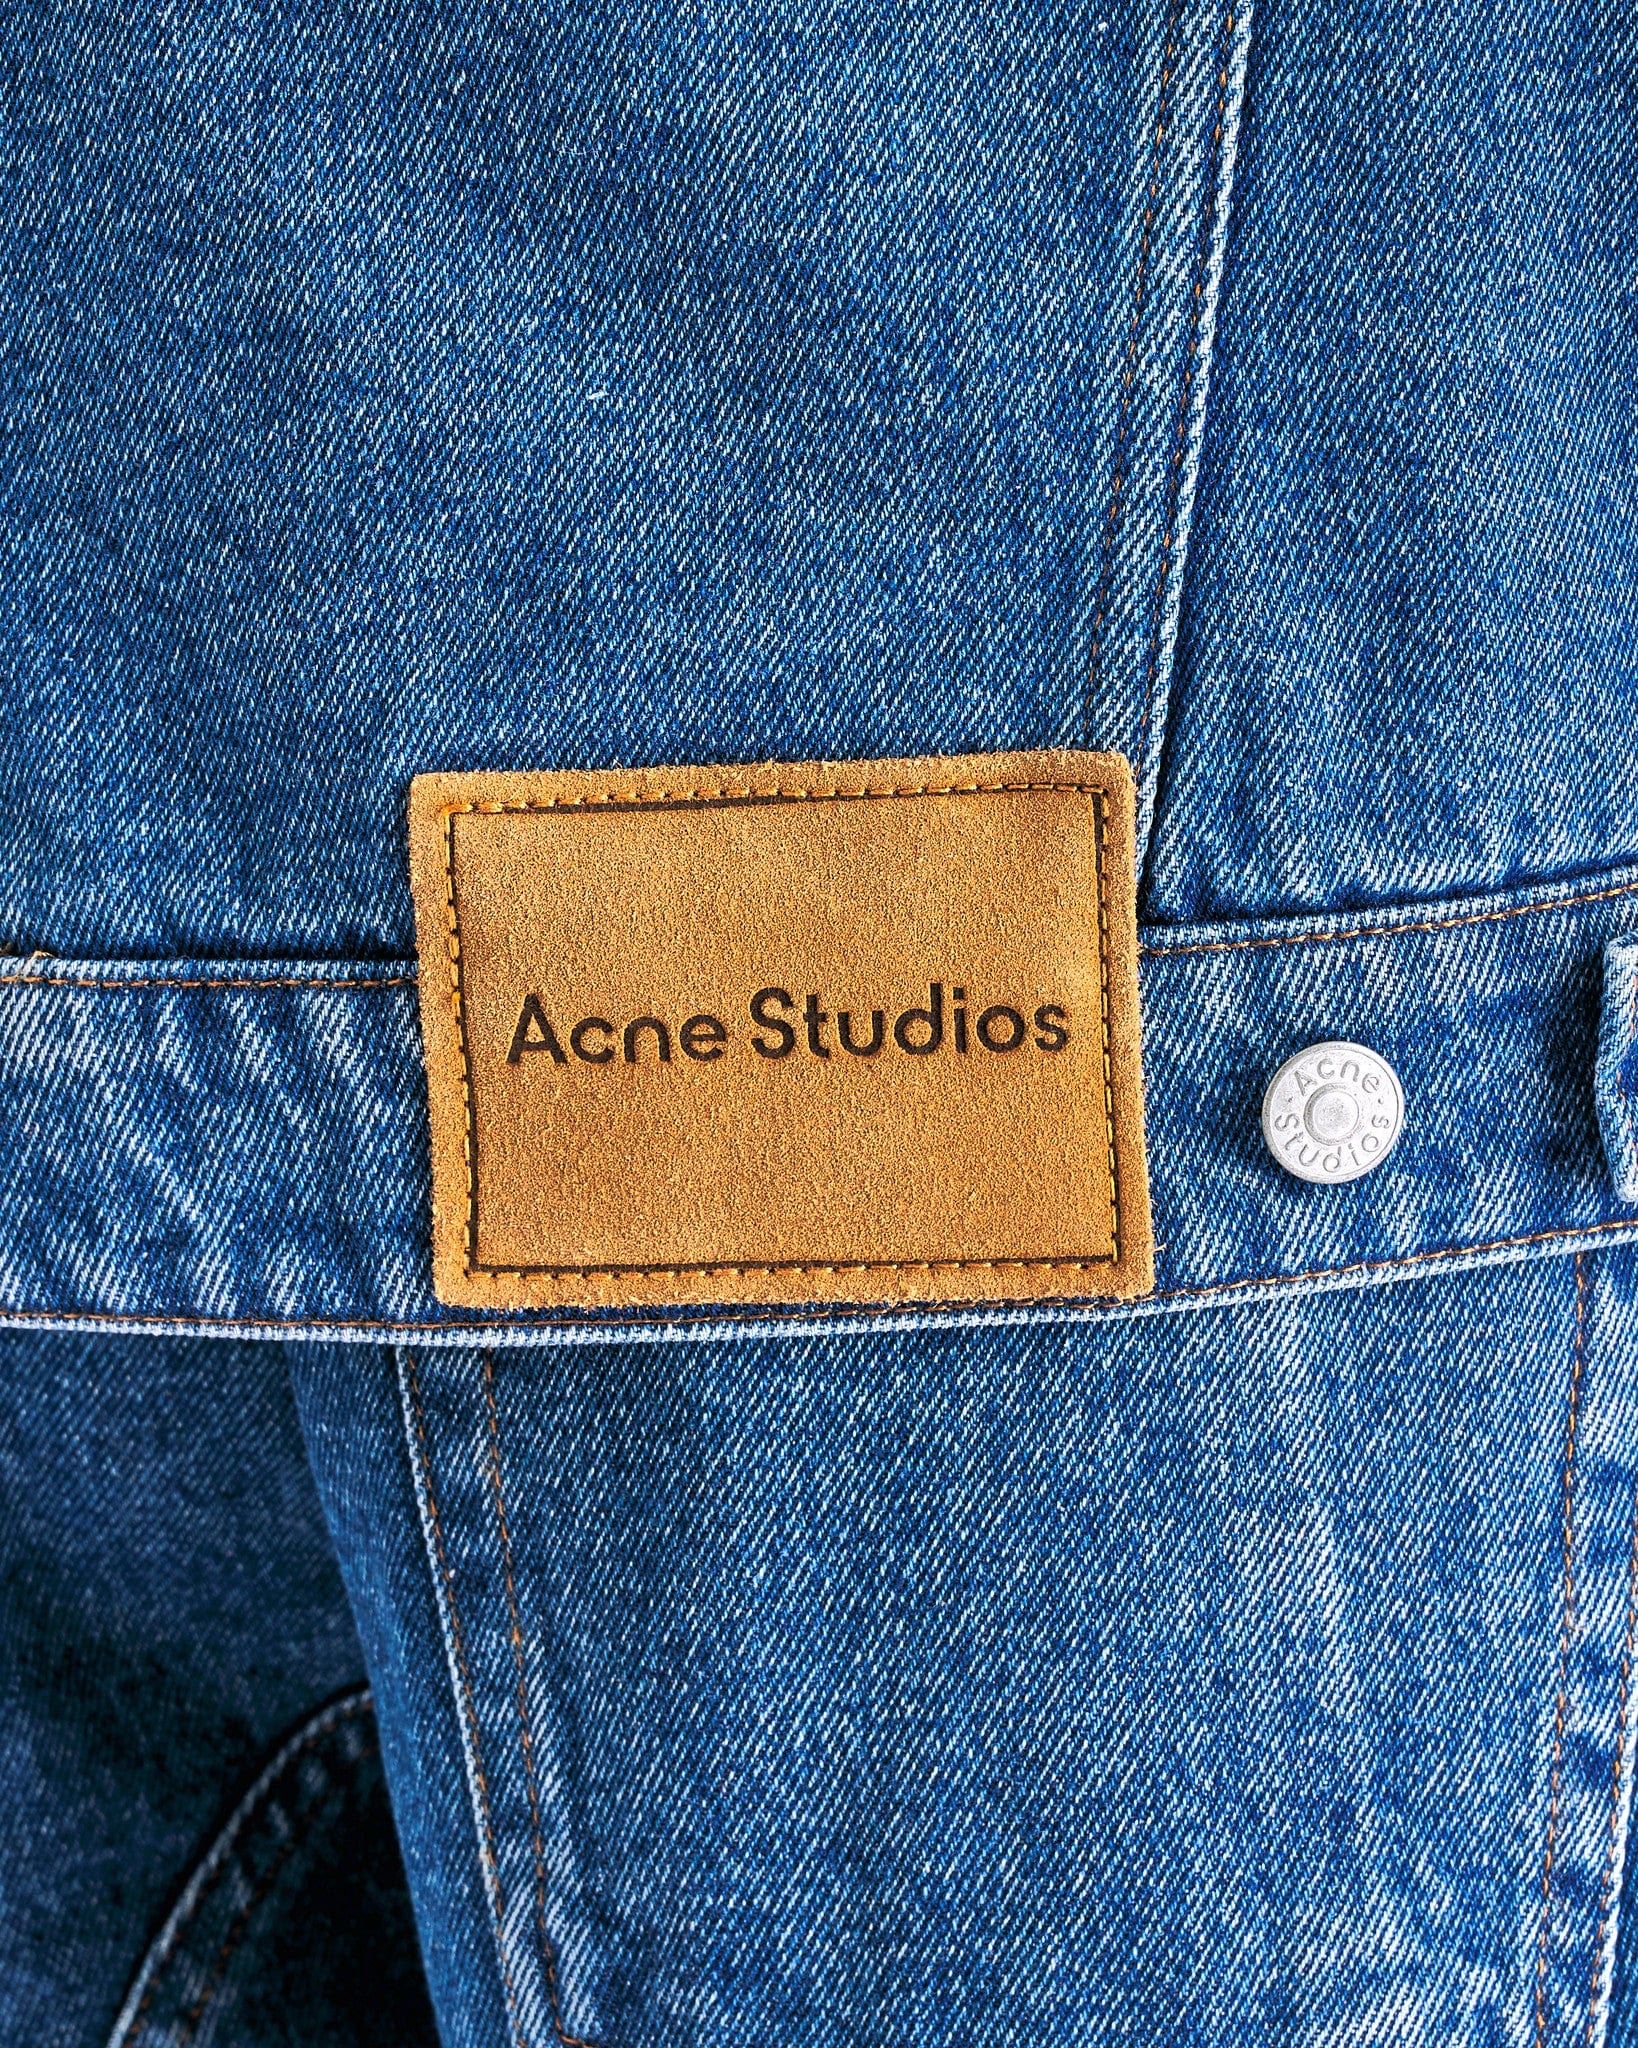 Acne Studios Men's Jackets Denim Jacket in Mid Blue